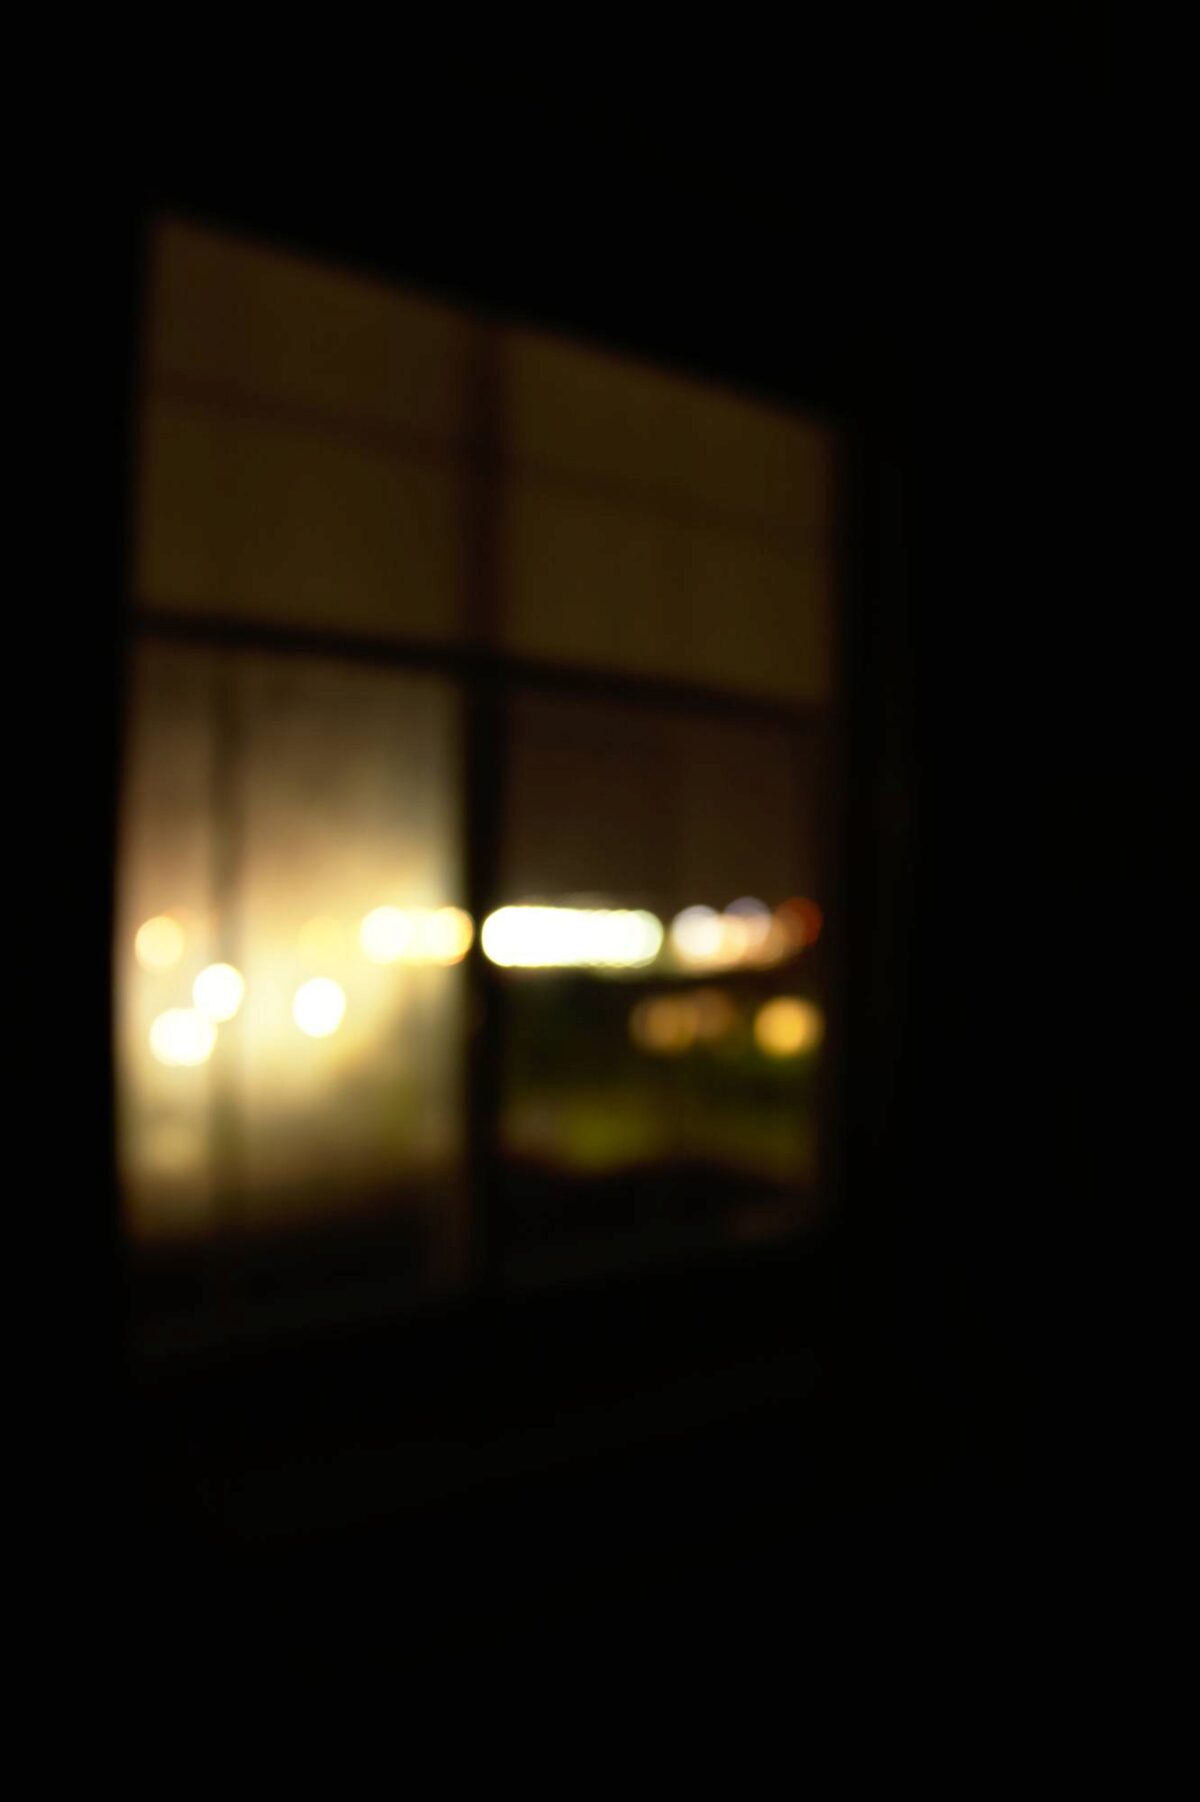 finestra su una stanza buia